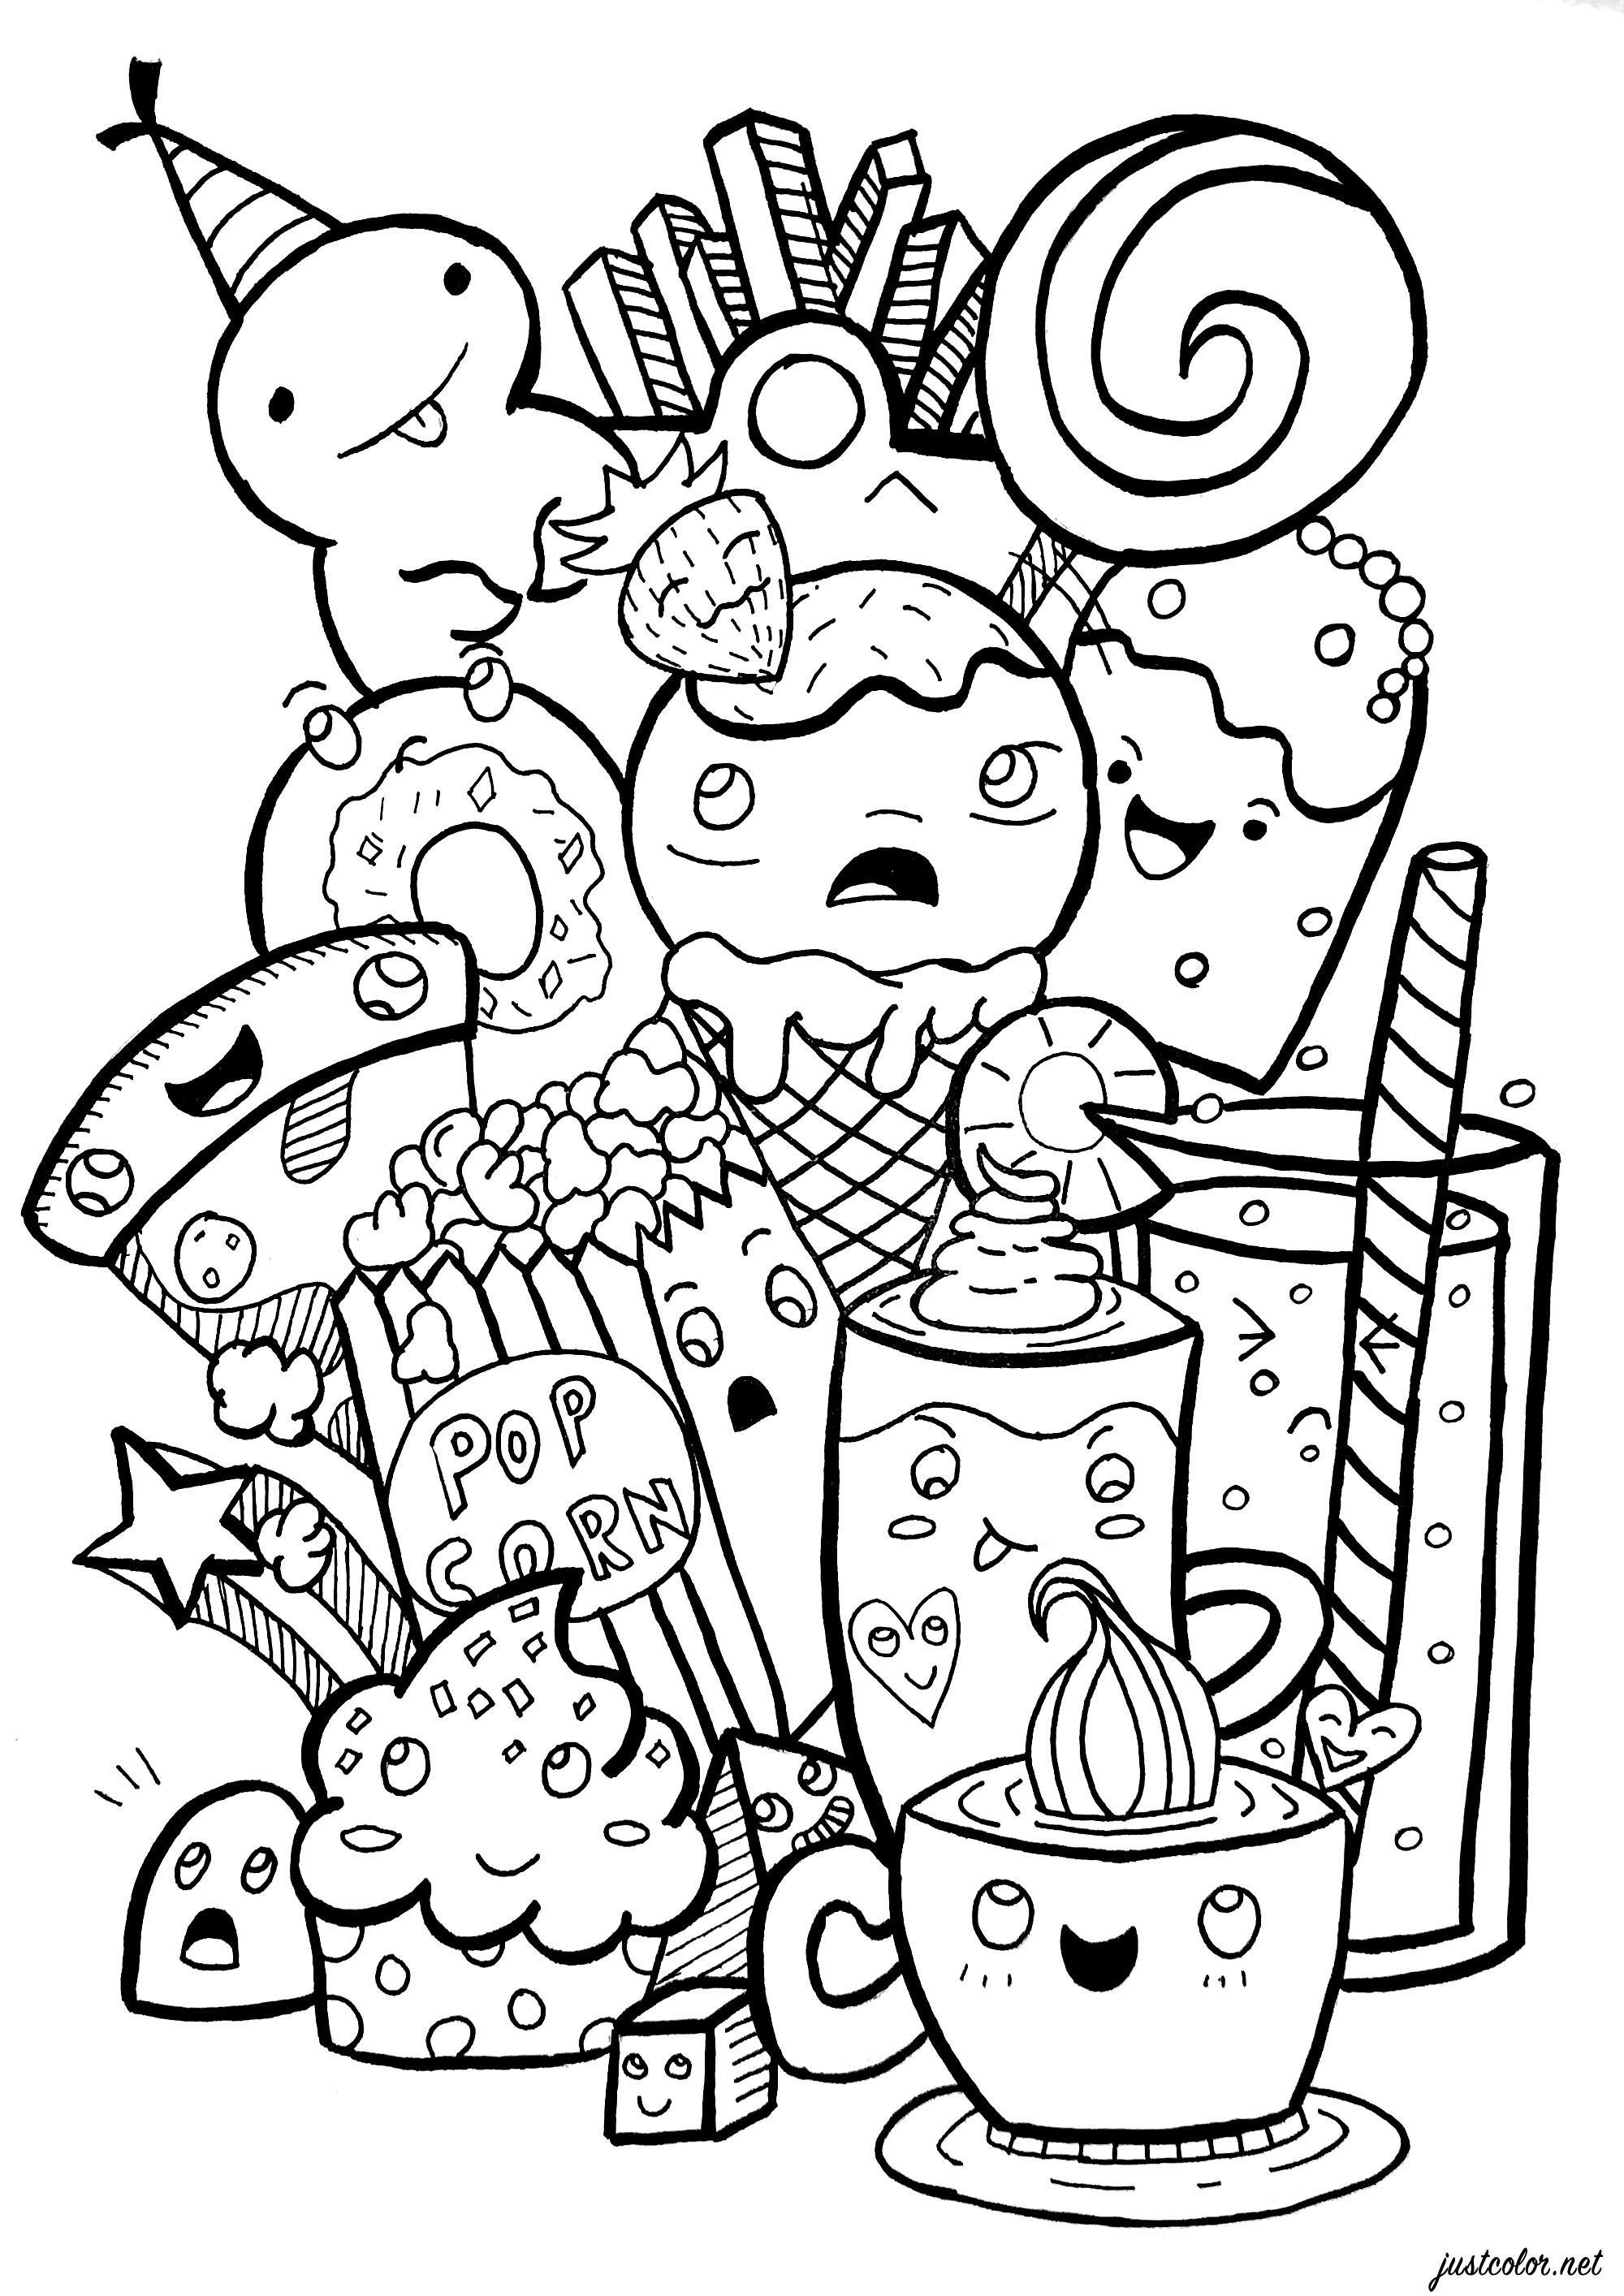 Junk food Doodle Doodle Art / Doodling Adult Coloring Pages